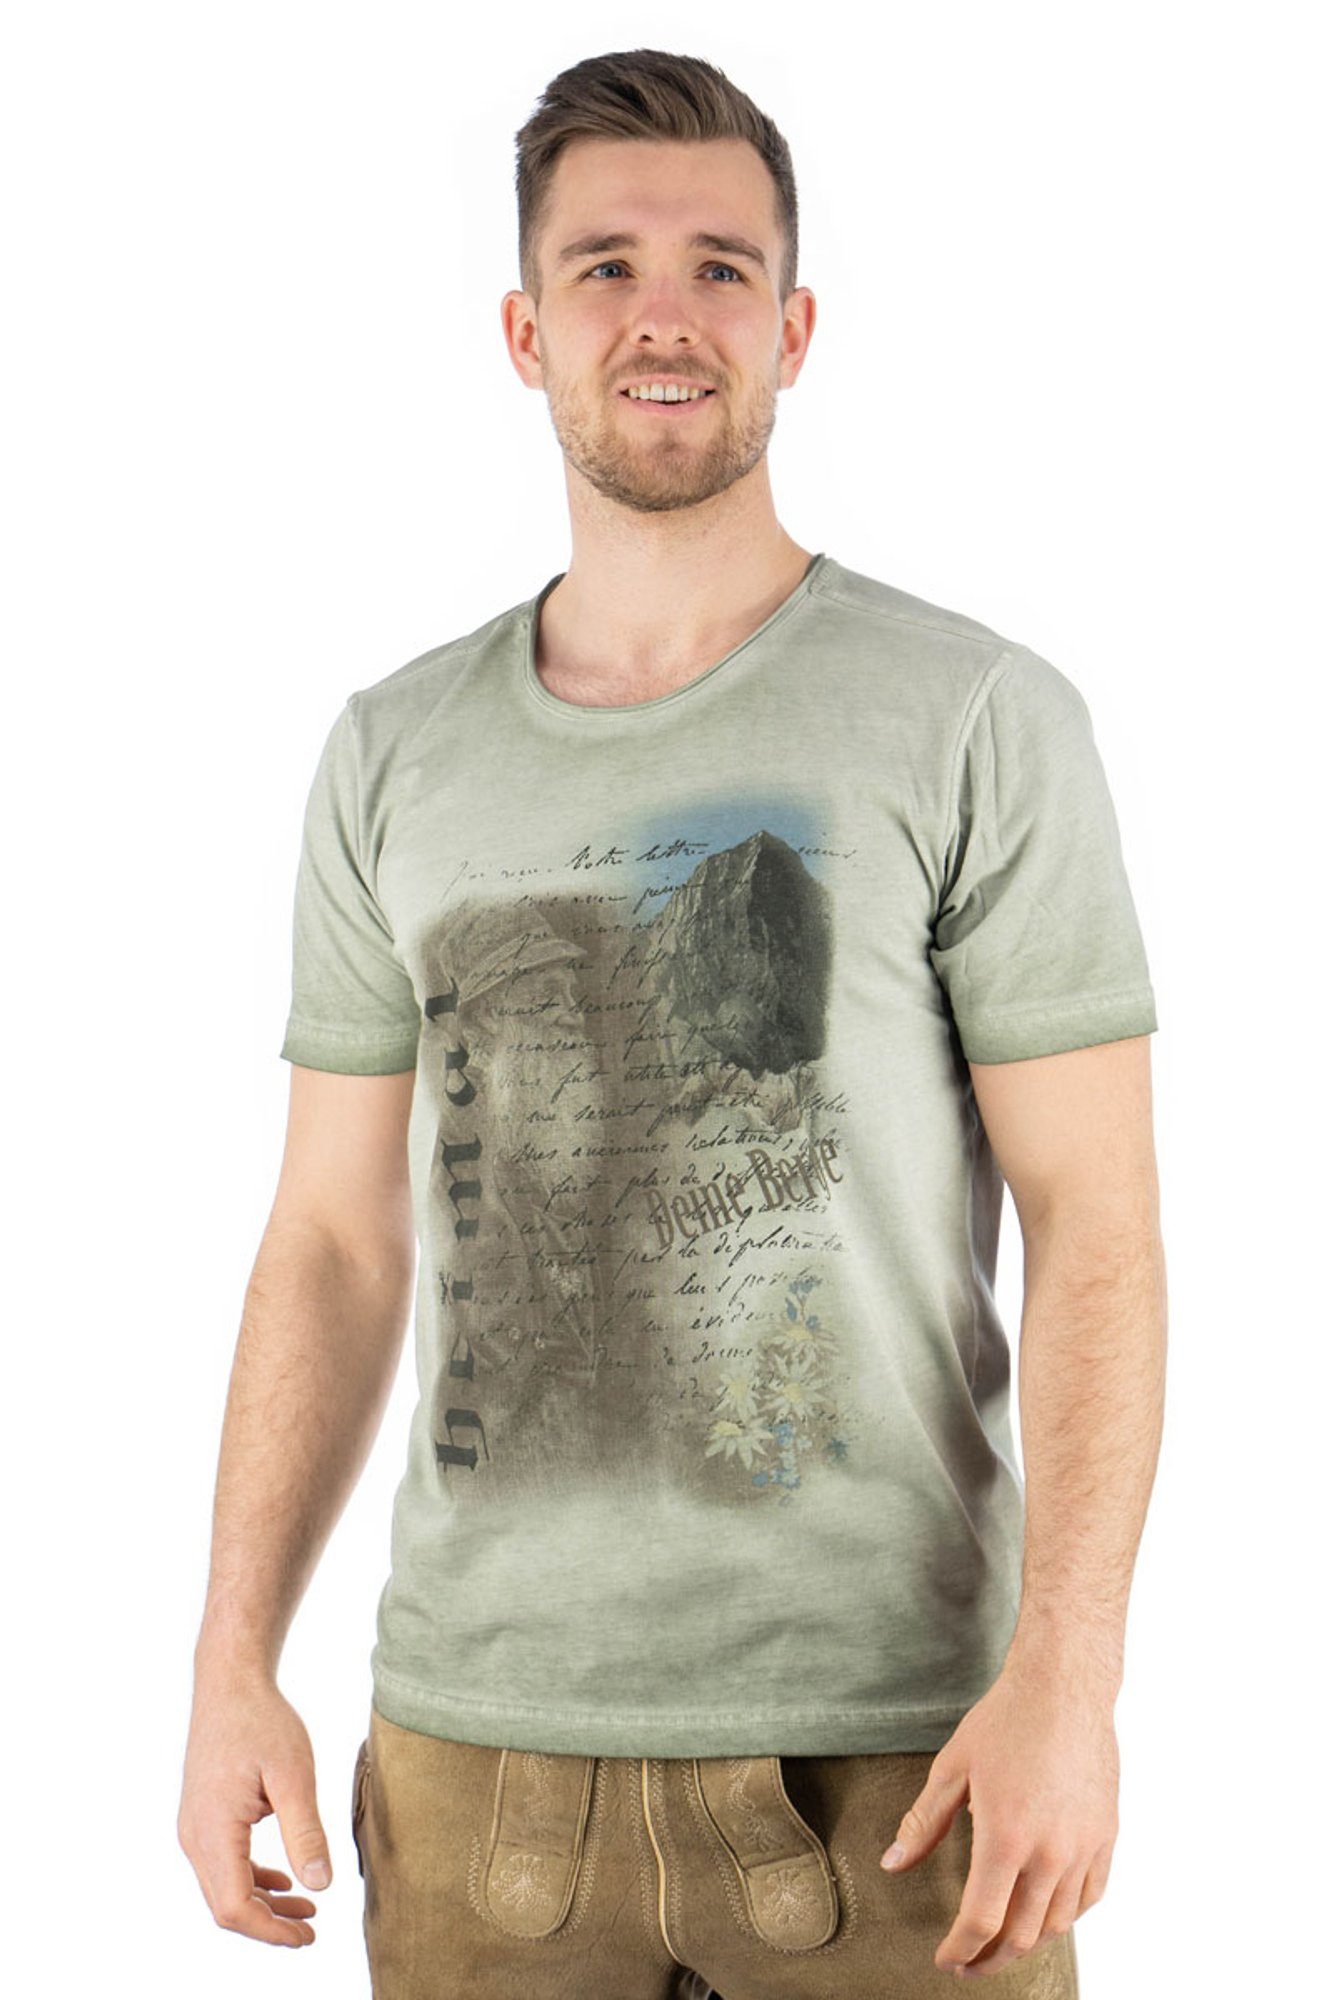 OS-Trachten Trachtenshirt Praiol Kurzarm T-Shirt mit Motivdruck khaki/schlamm